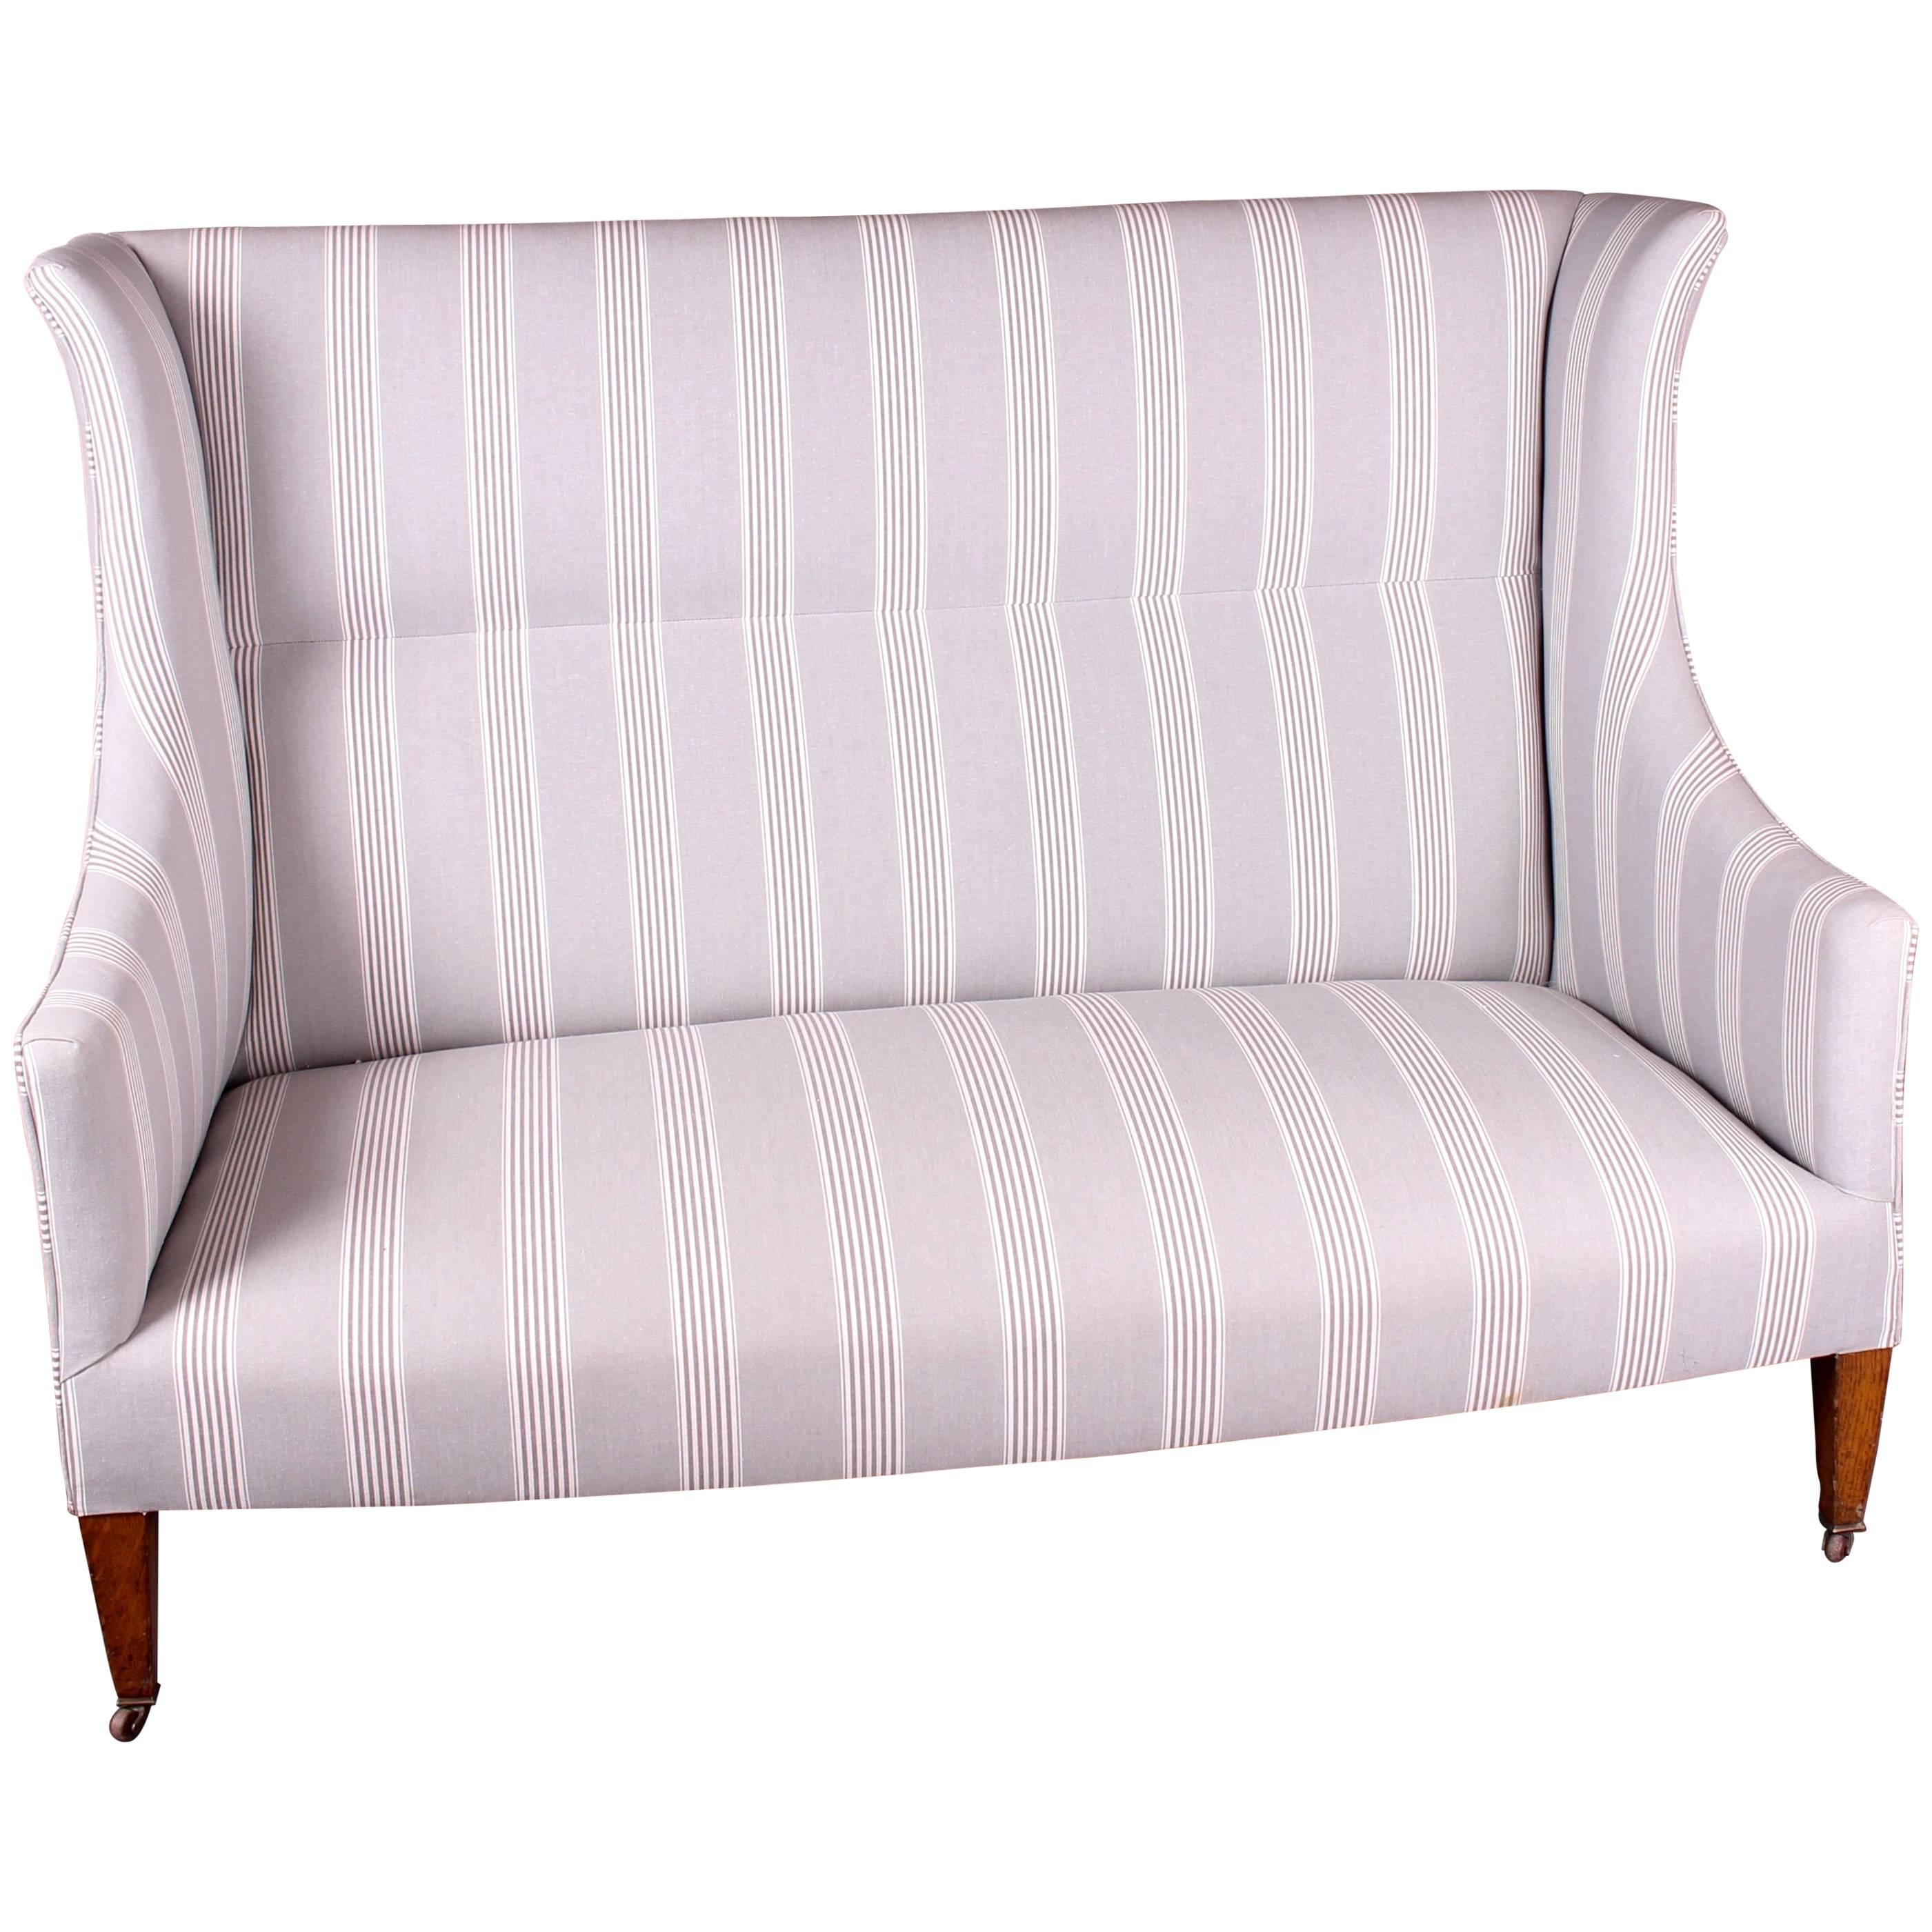 Edwardian Wingback Sofa Settee in a French Grey Stripe Fabric